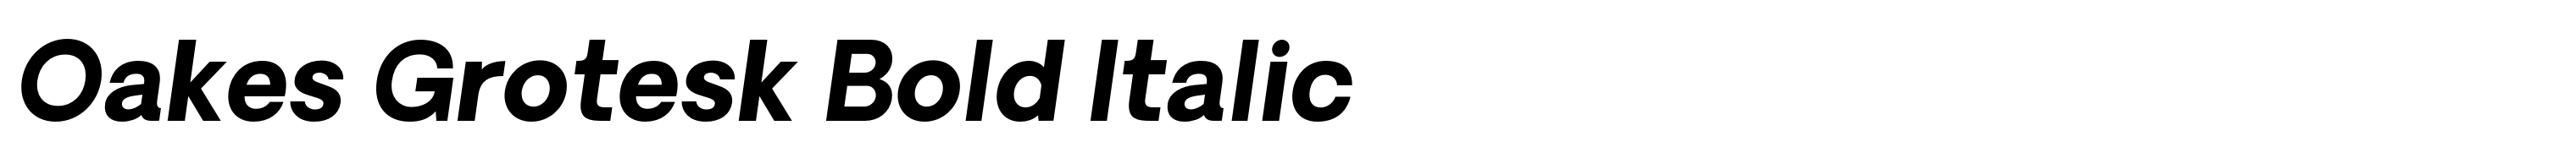 Oakes Grotesk Bold Italic